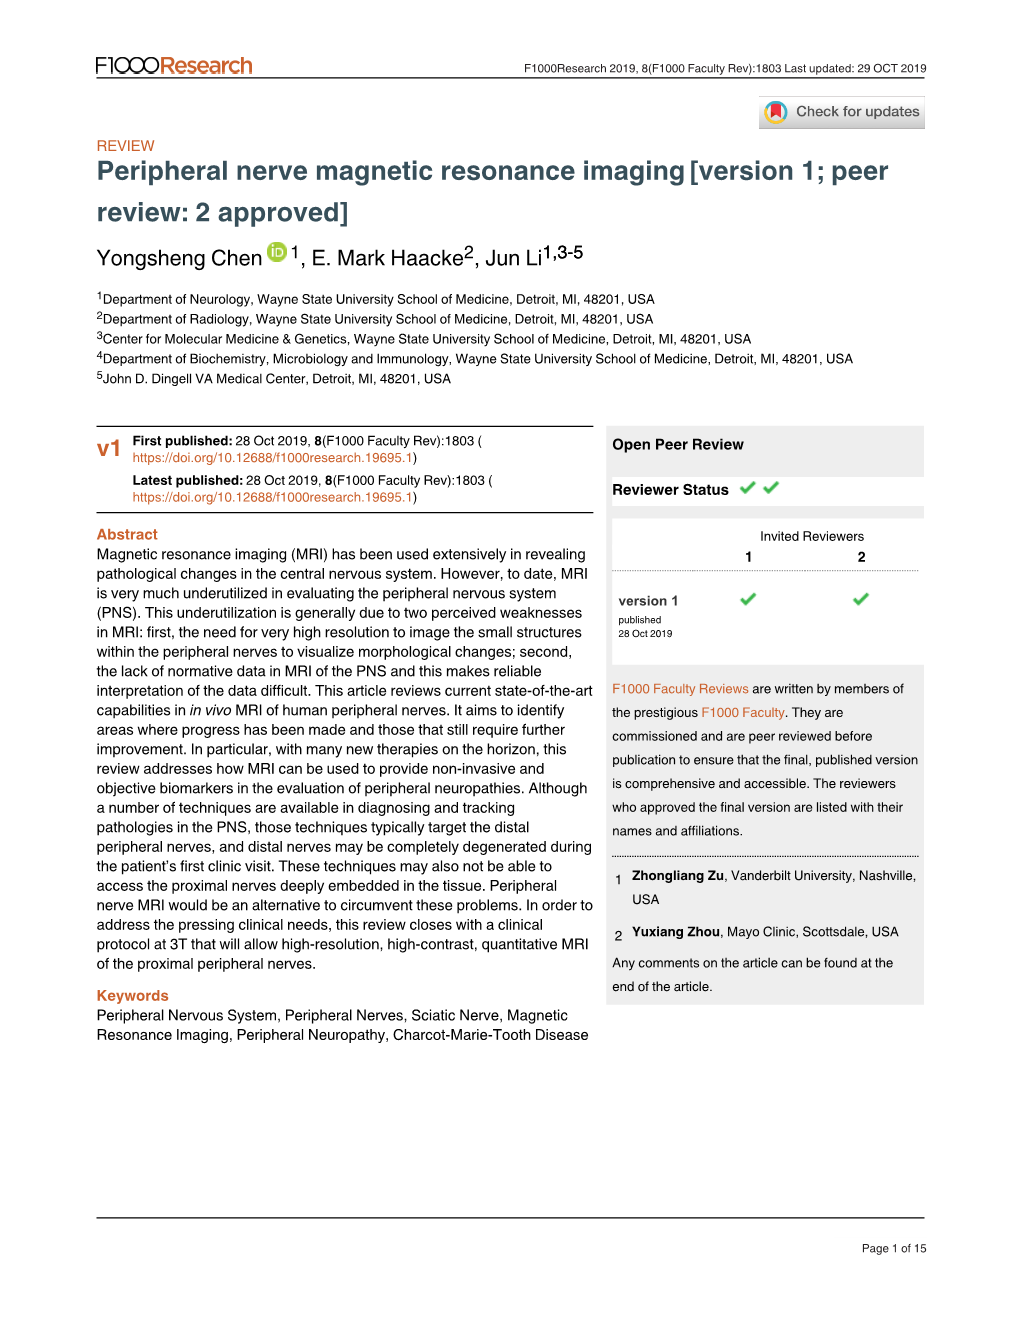 Peripheral Nerve Magnetic Resonance Imaging[Version 1; Peer Review: 2